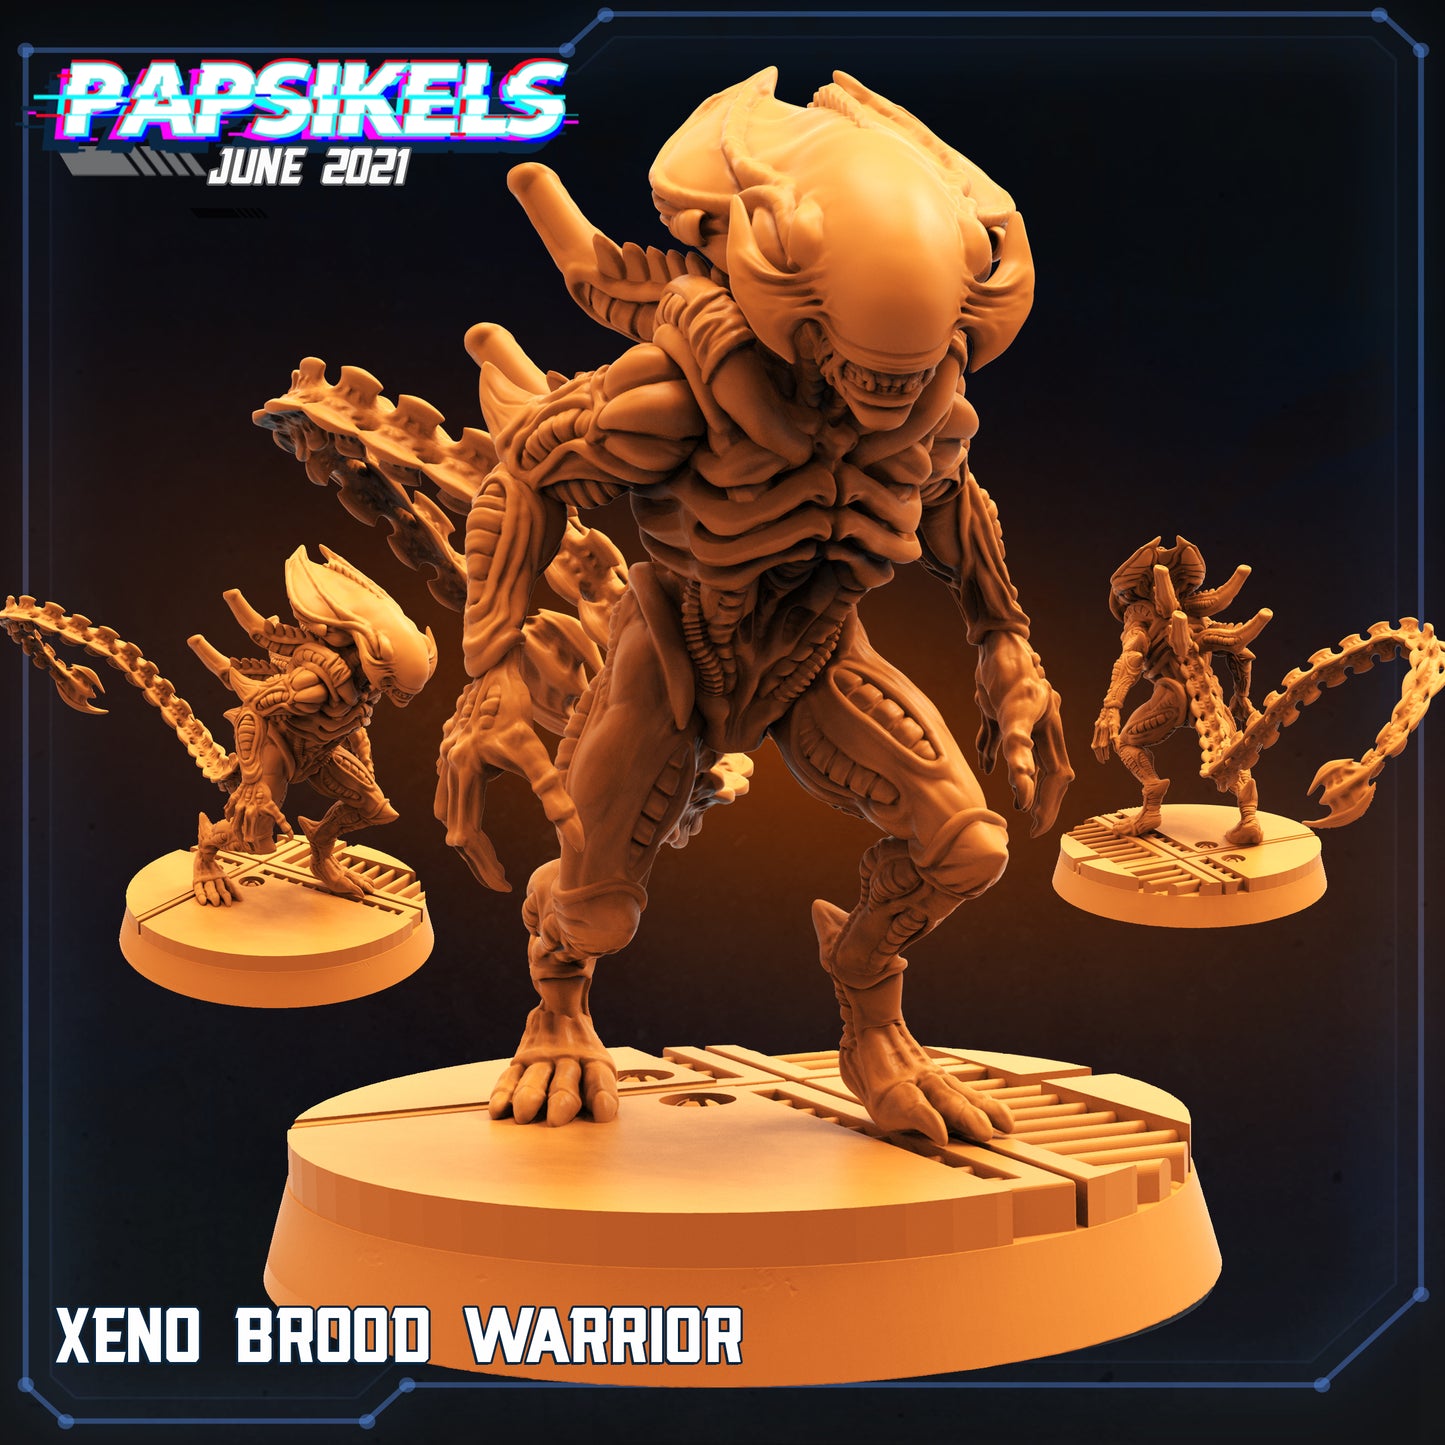 Xeno Brood Warrior